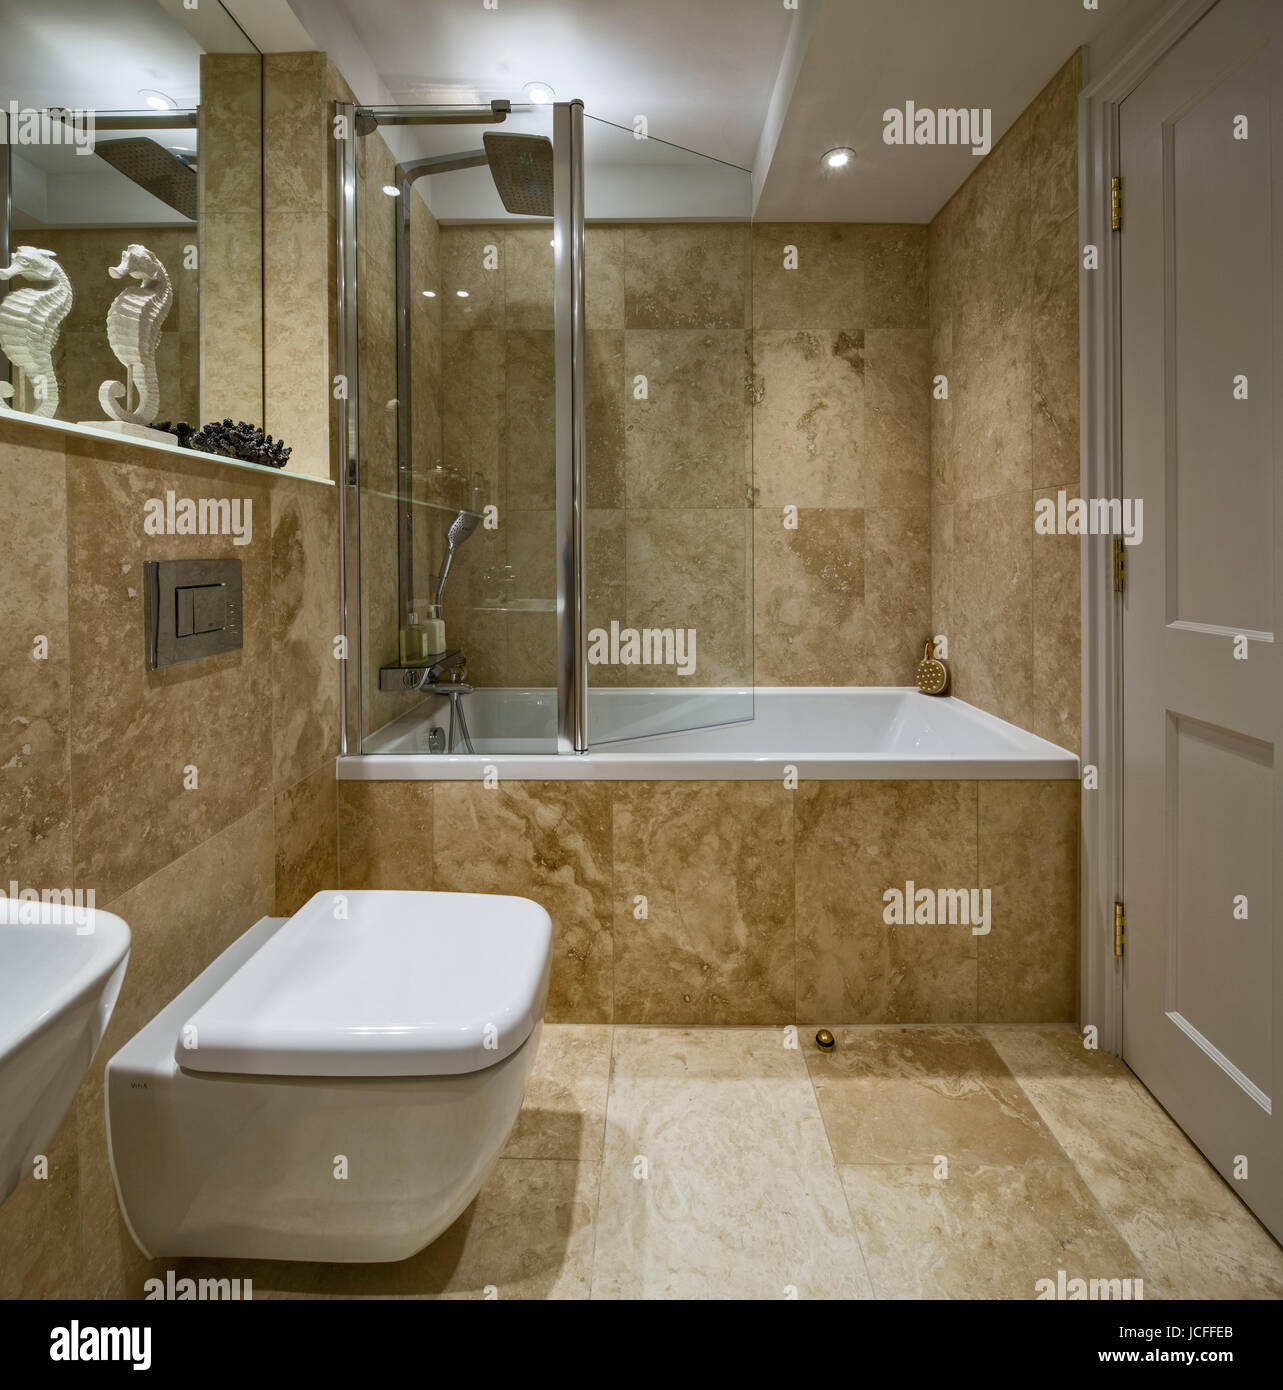 Bathroom. King Edward VII Estate Apartments, Midhurst, United Kingdom. Architect: City & Country developer, 2016. Stock Photo